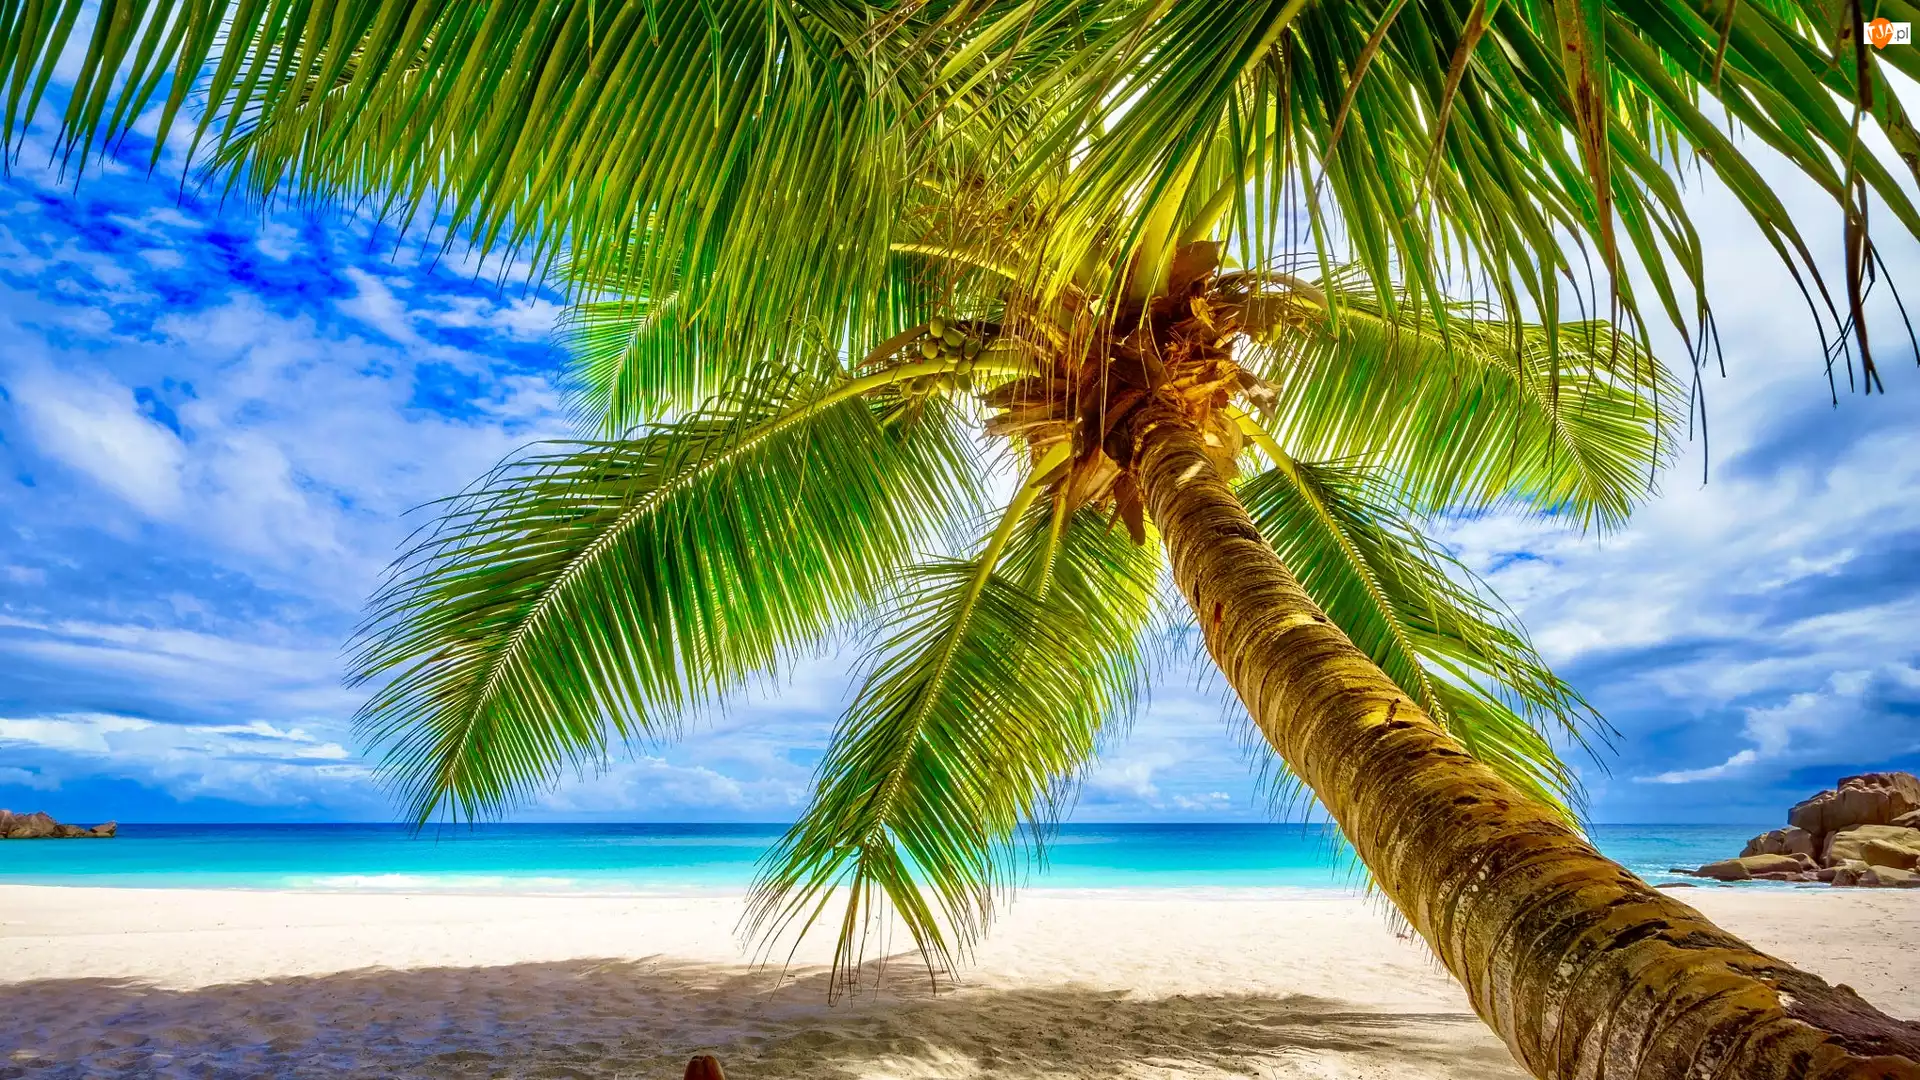 Seszele, Morze, Plaża, Palma kokosowa